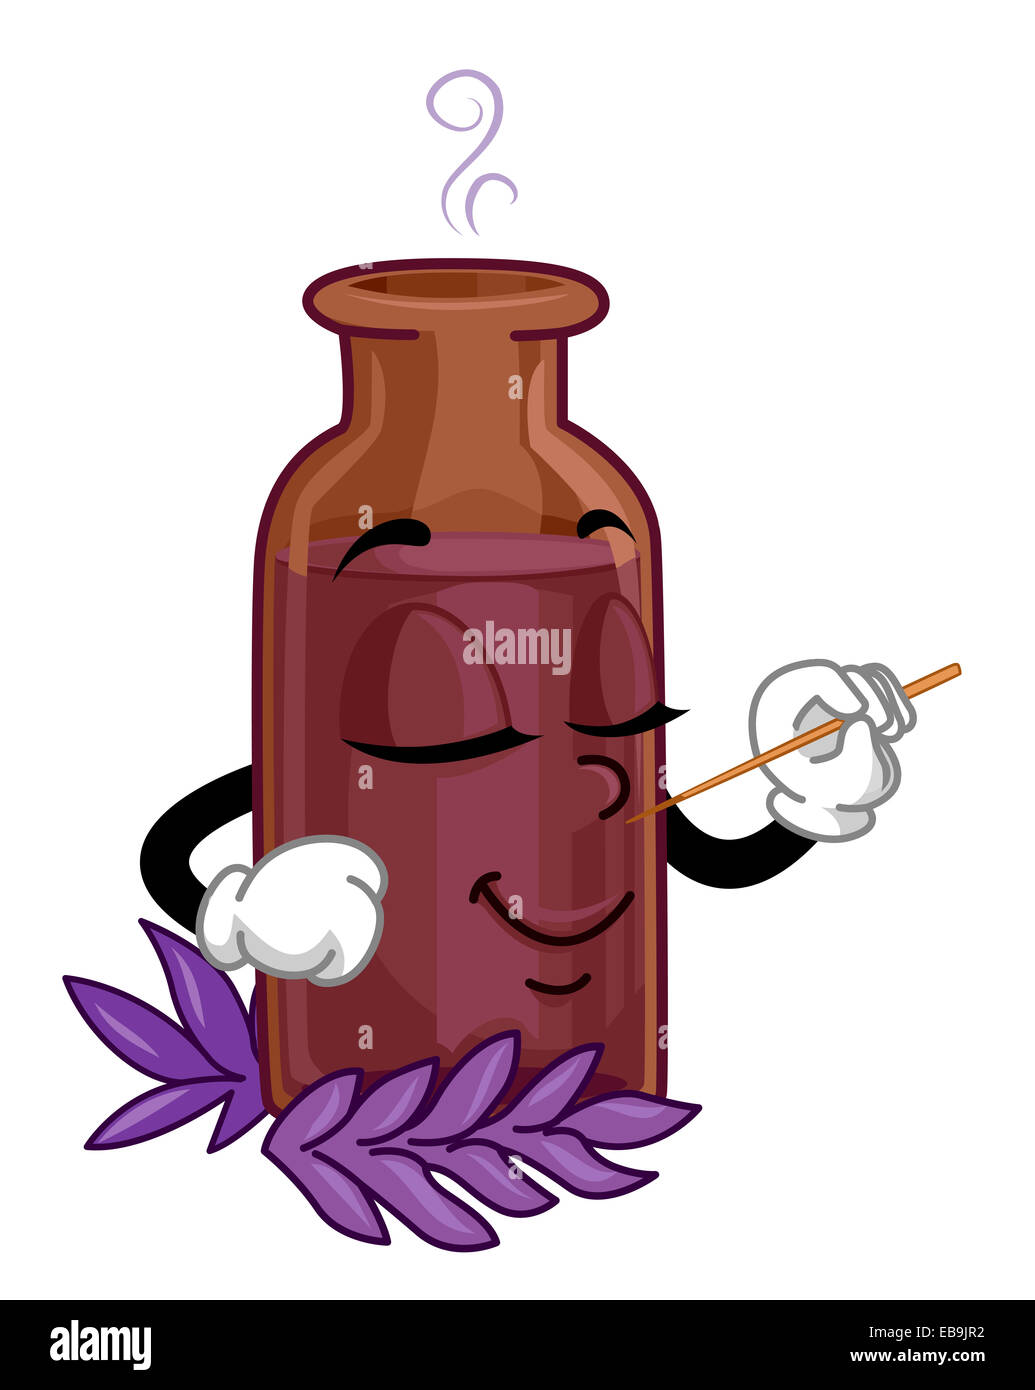 Mascot Illustration Featuring an Organic Perfume Stock Photo